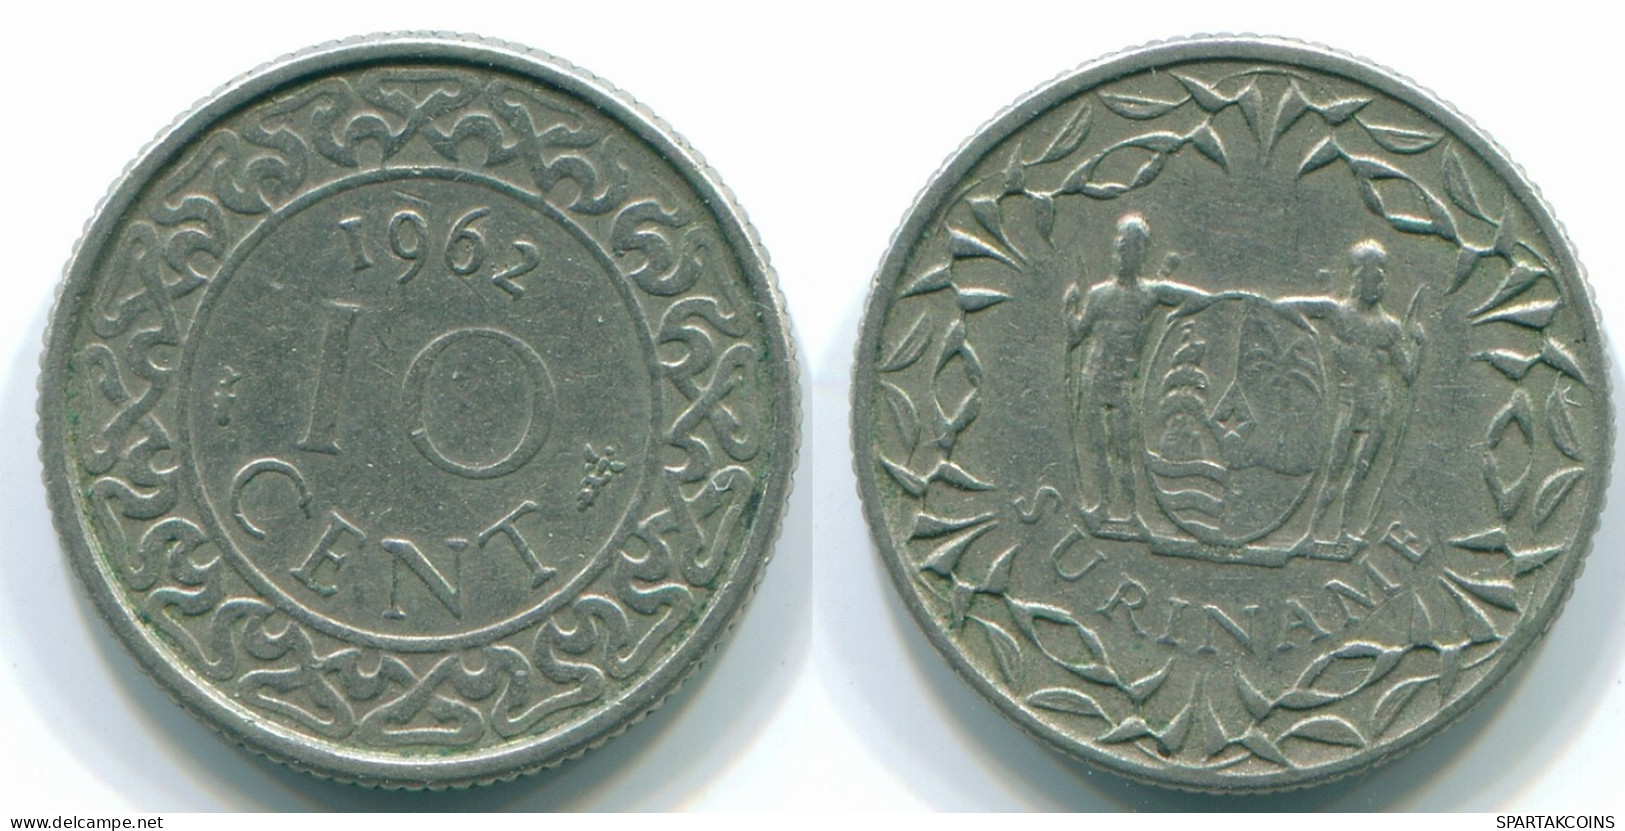 10 CENTS 1962 SURINAME Netherlands Nickel Colonial Coin #S13207.U.A - Surinam 1975 - ...